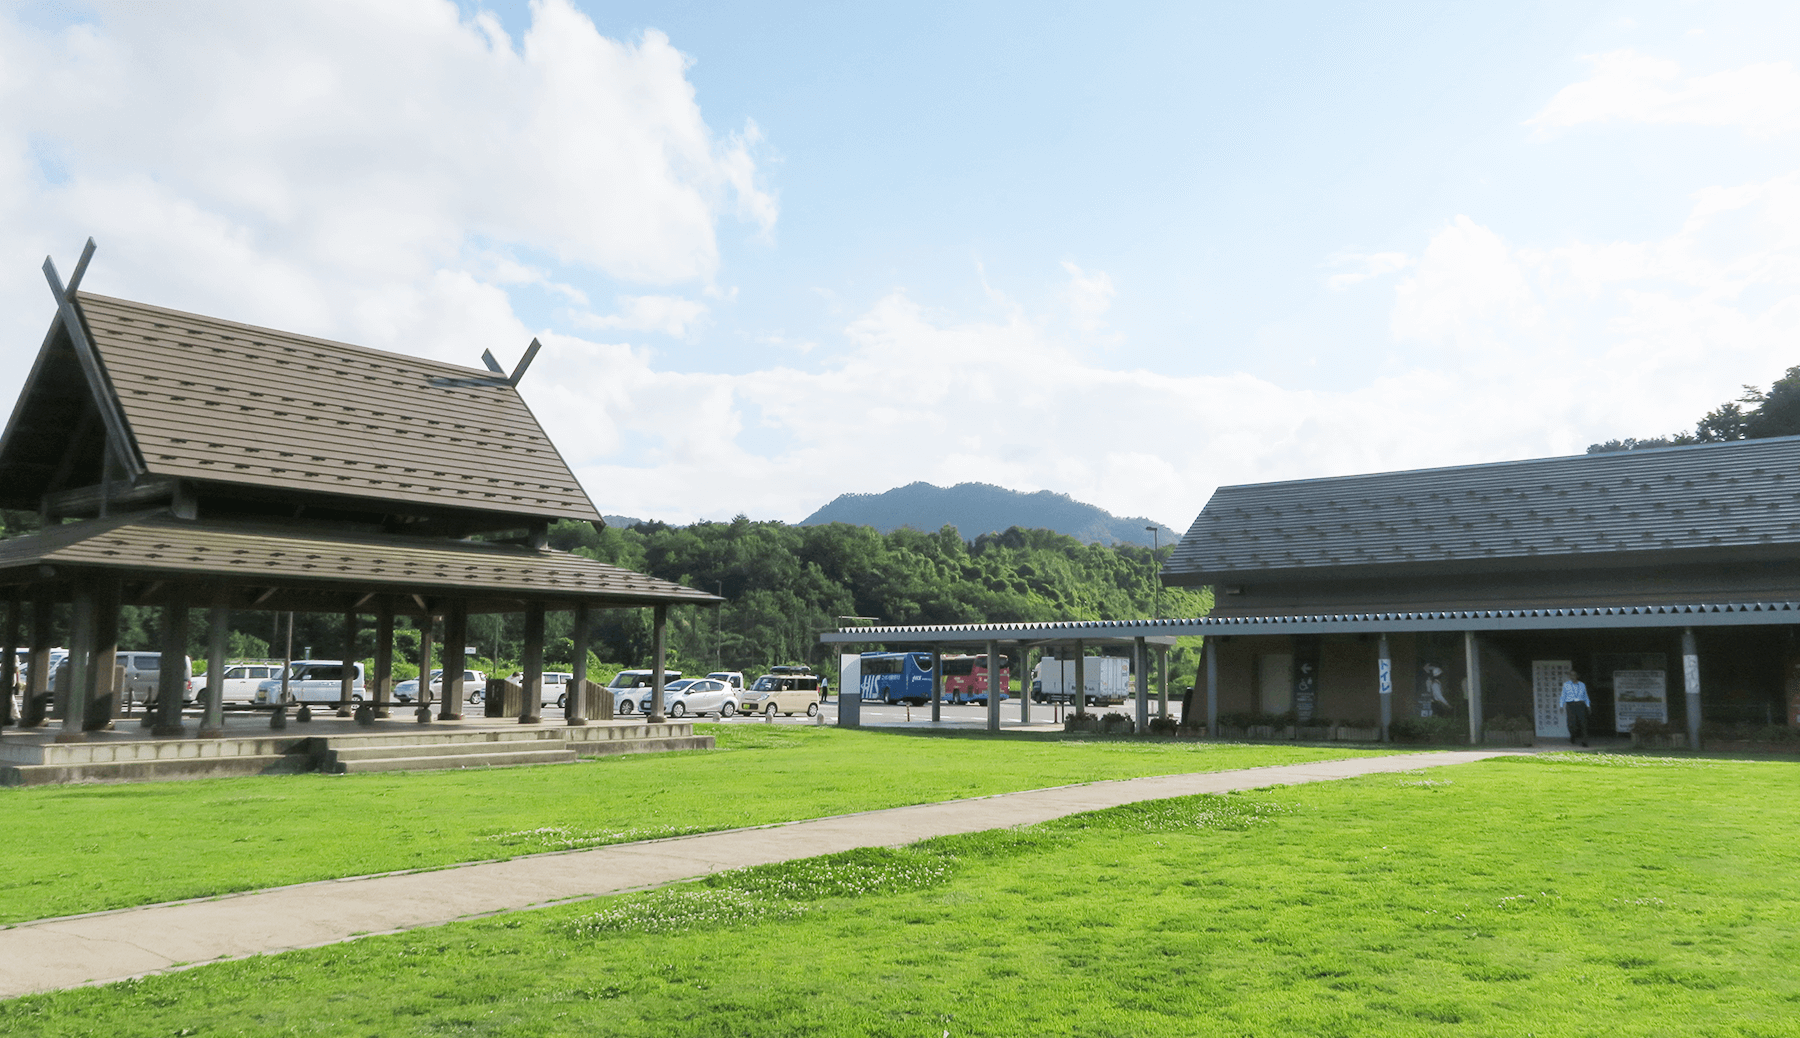 Roadside Station "Tajima's Home" (Tajima no Mahoroba)